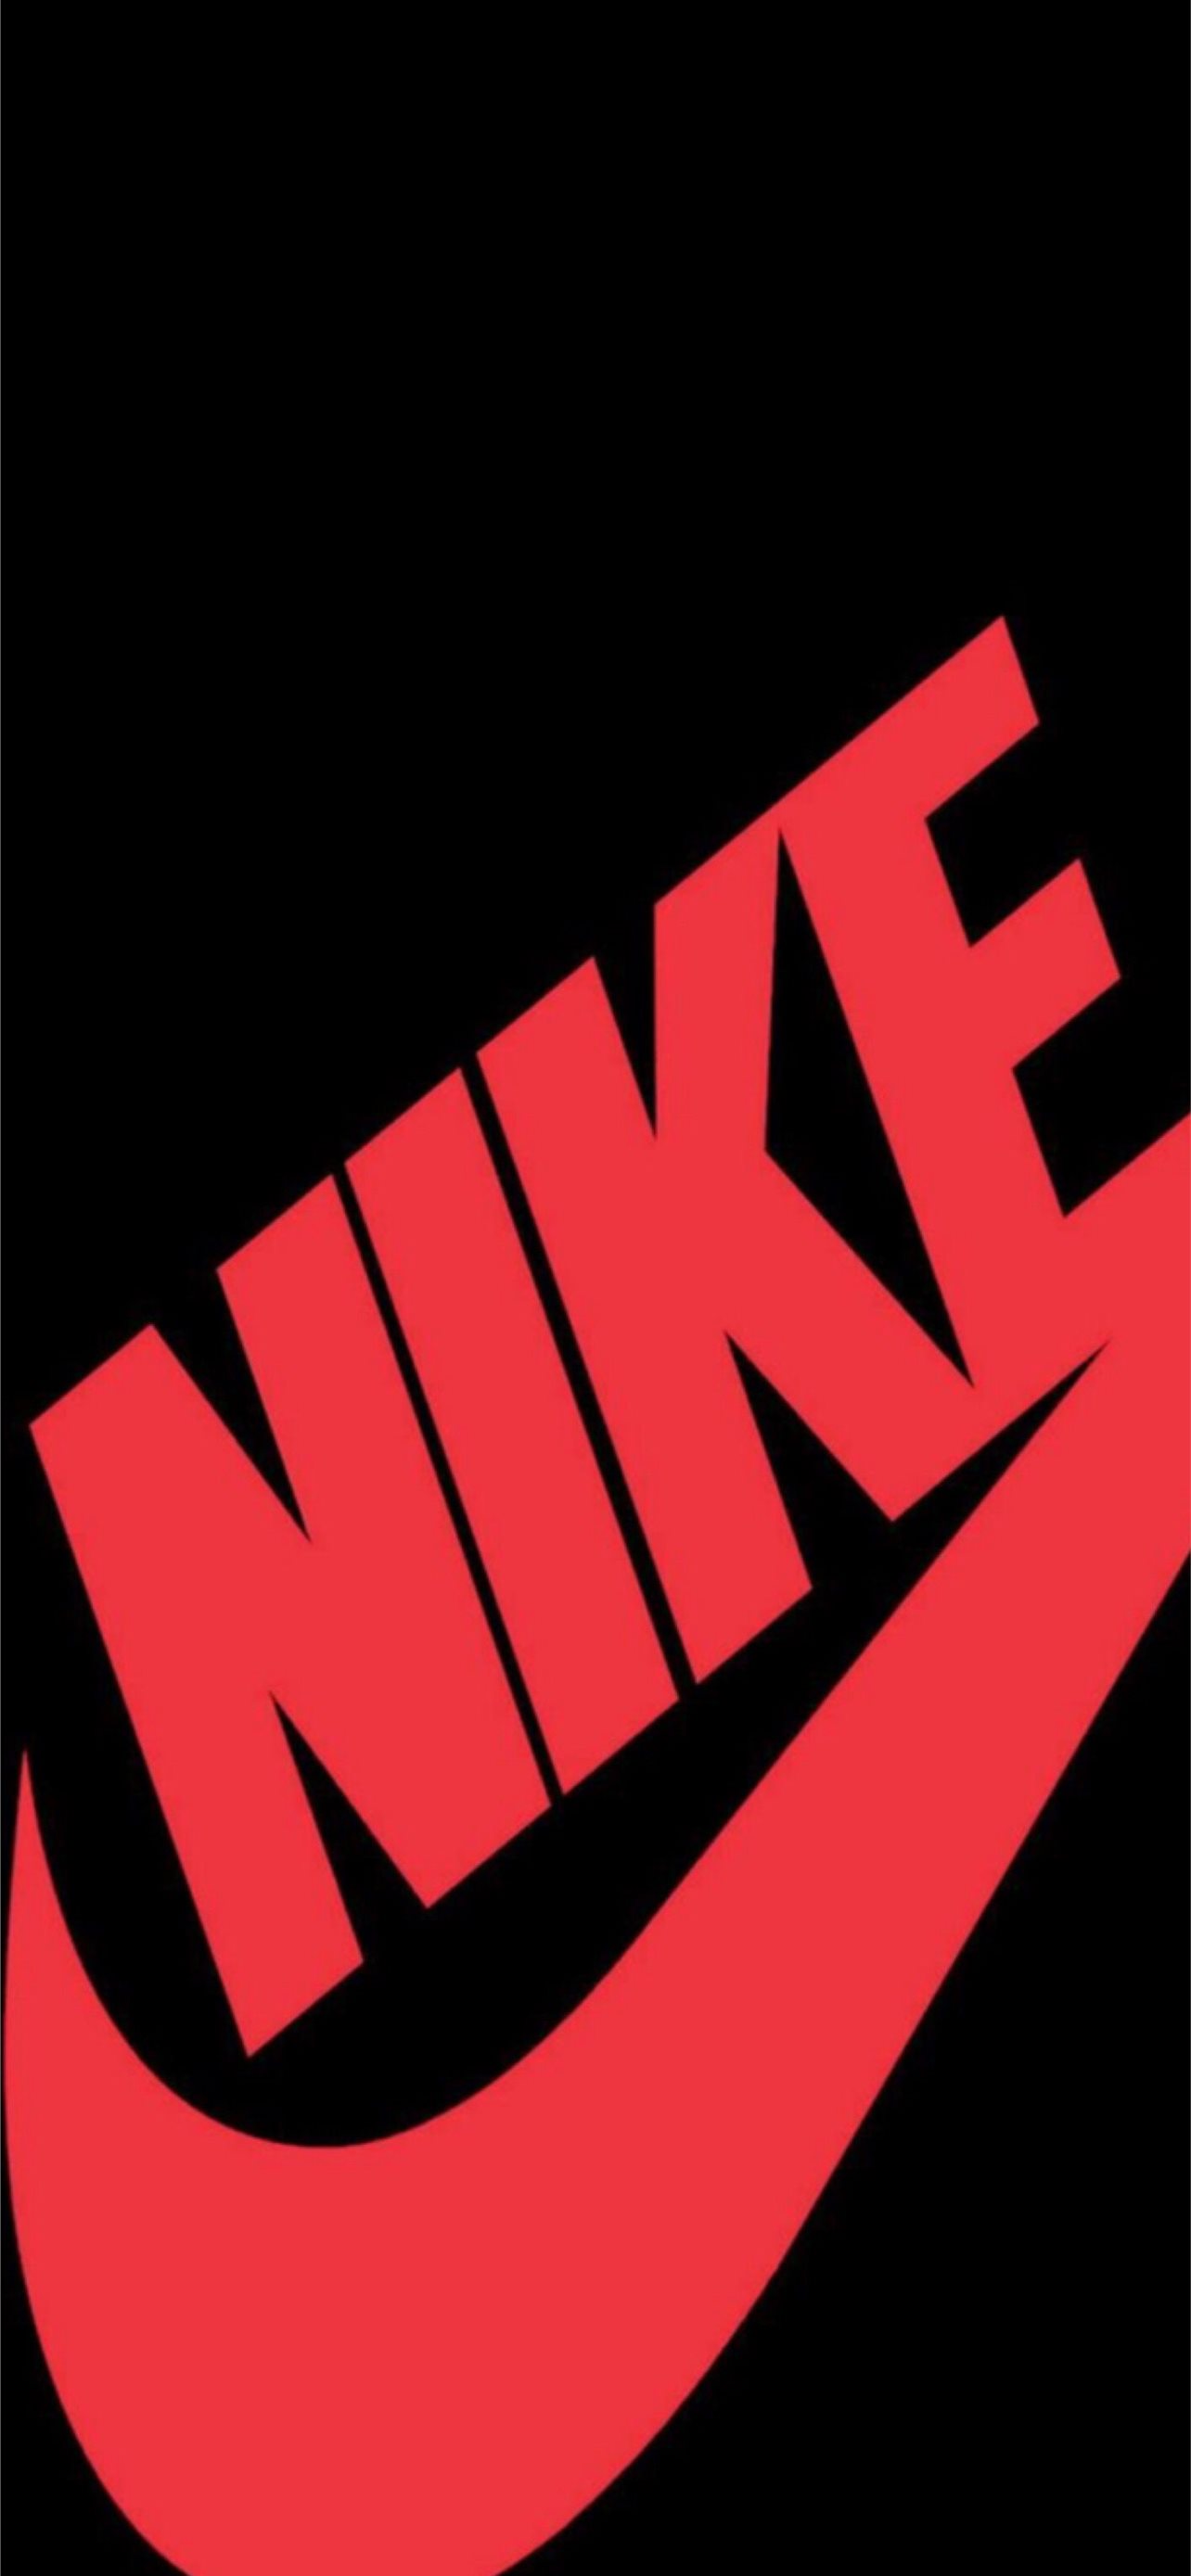 Nike Logo Iphone Wallpapers Free Download